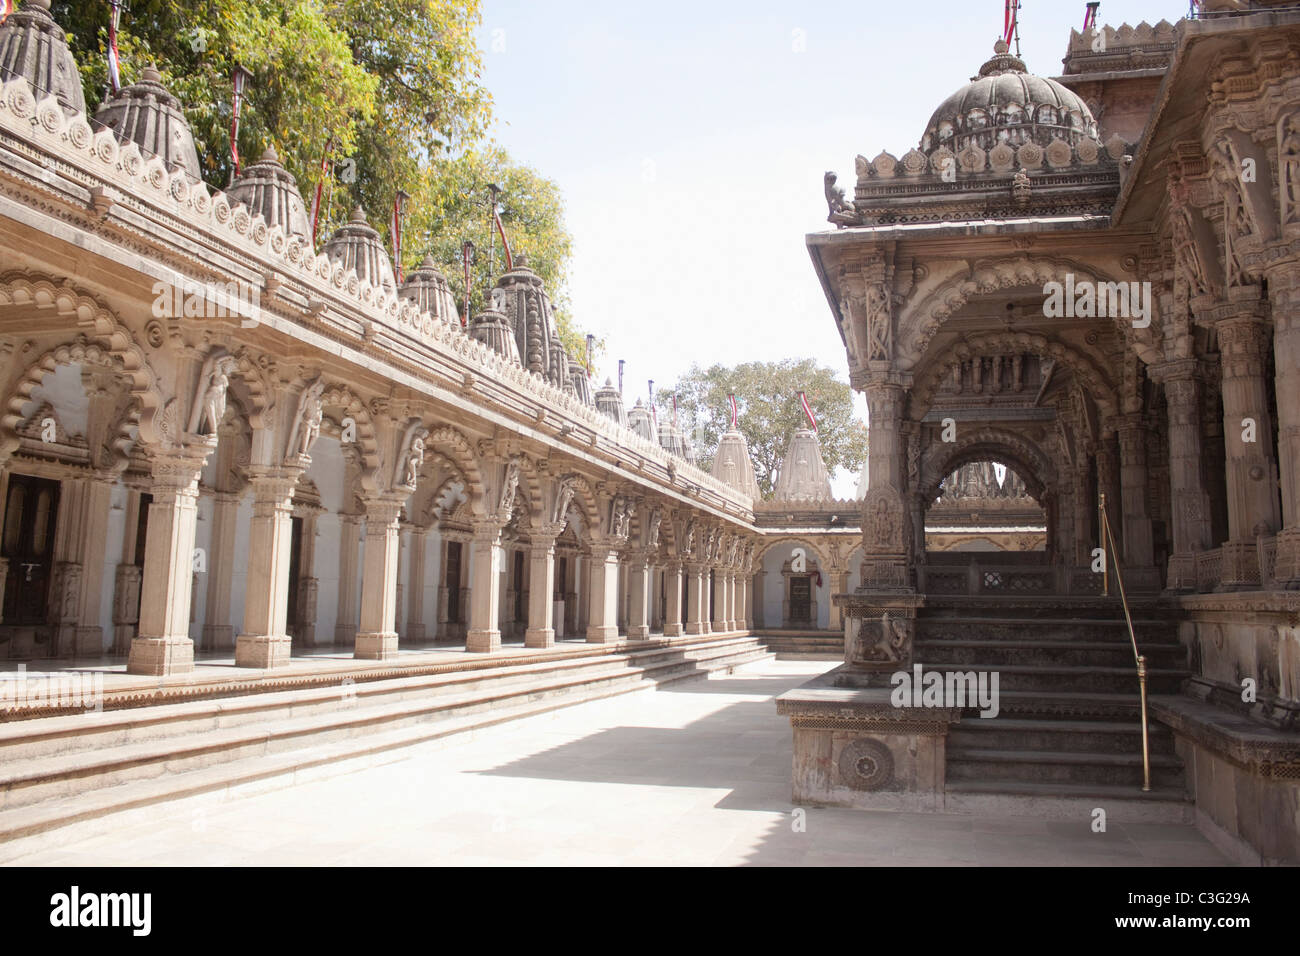 Architectural details of a temple, Swaminarayan Akshardham Temple, Ahmedabad, Gujarat, India Stock Photo